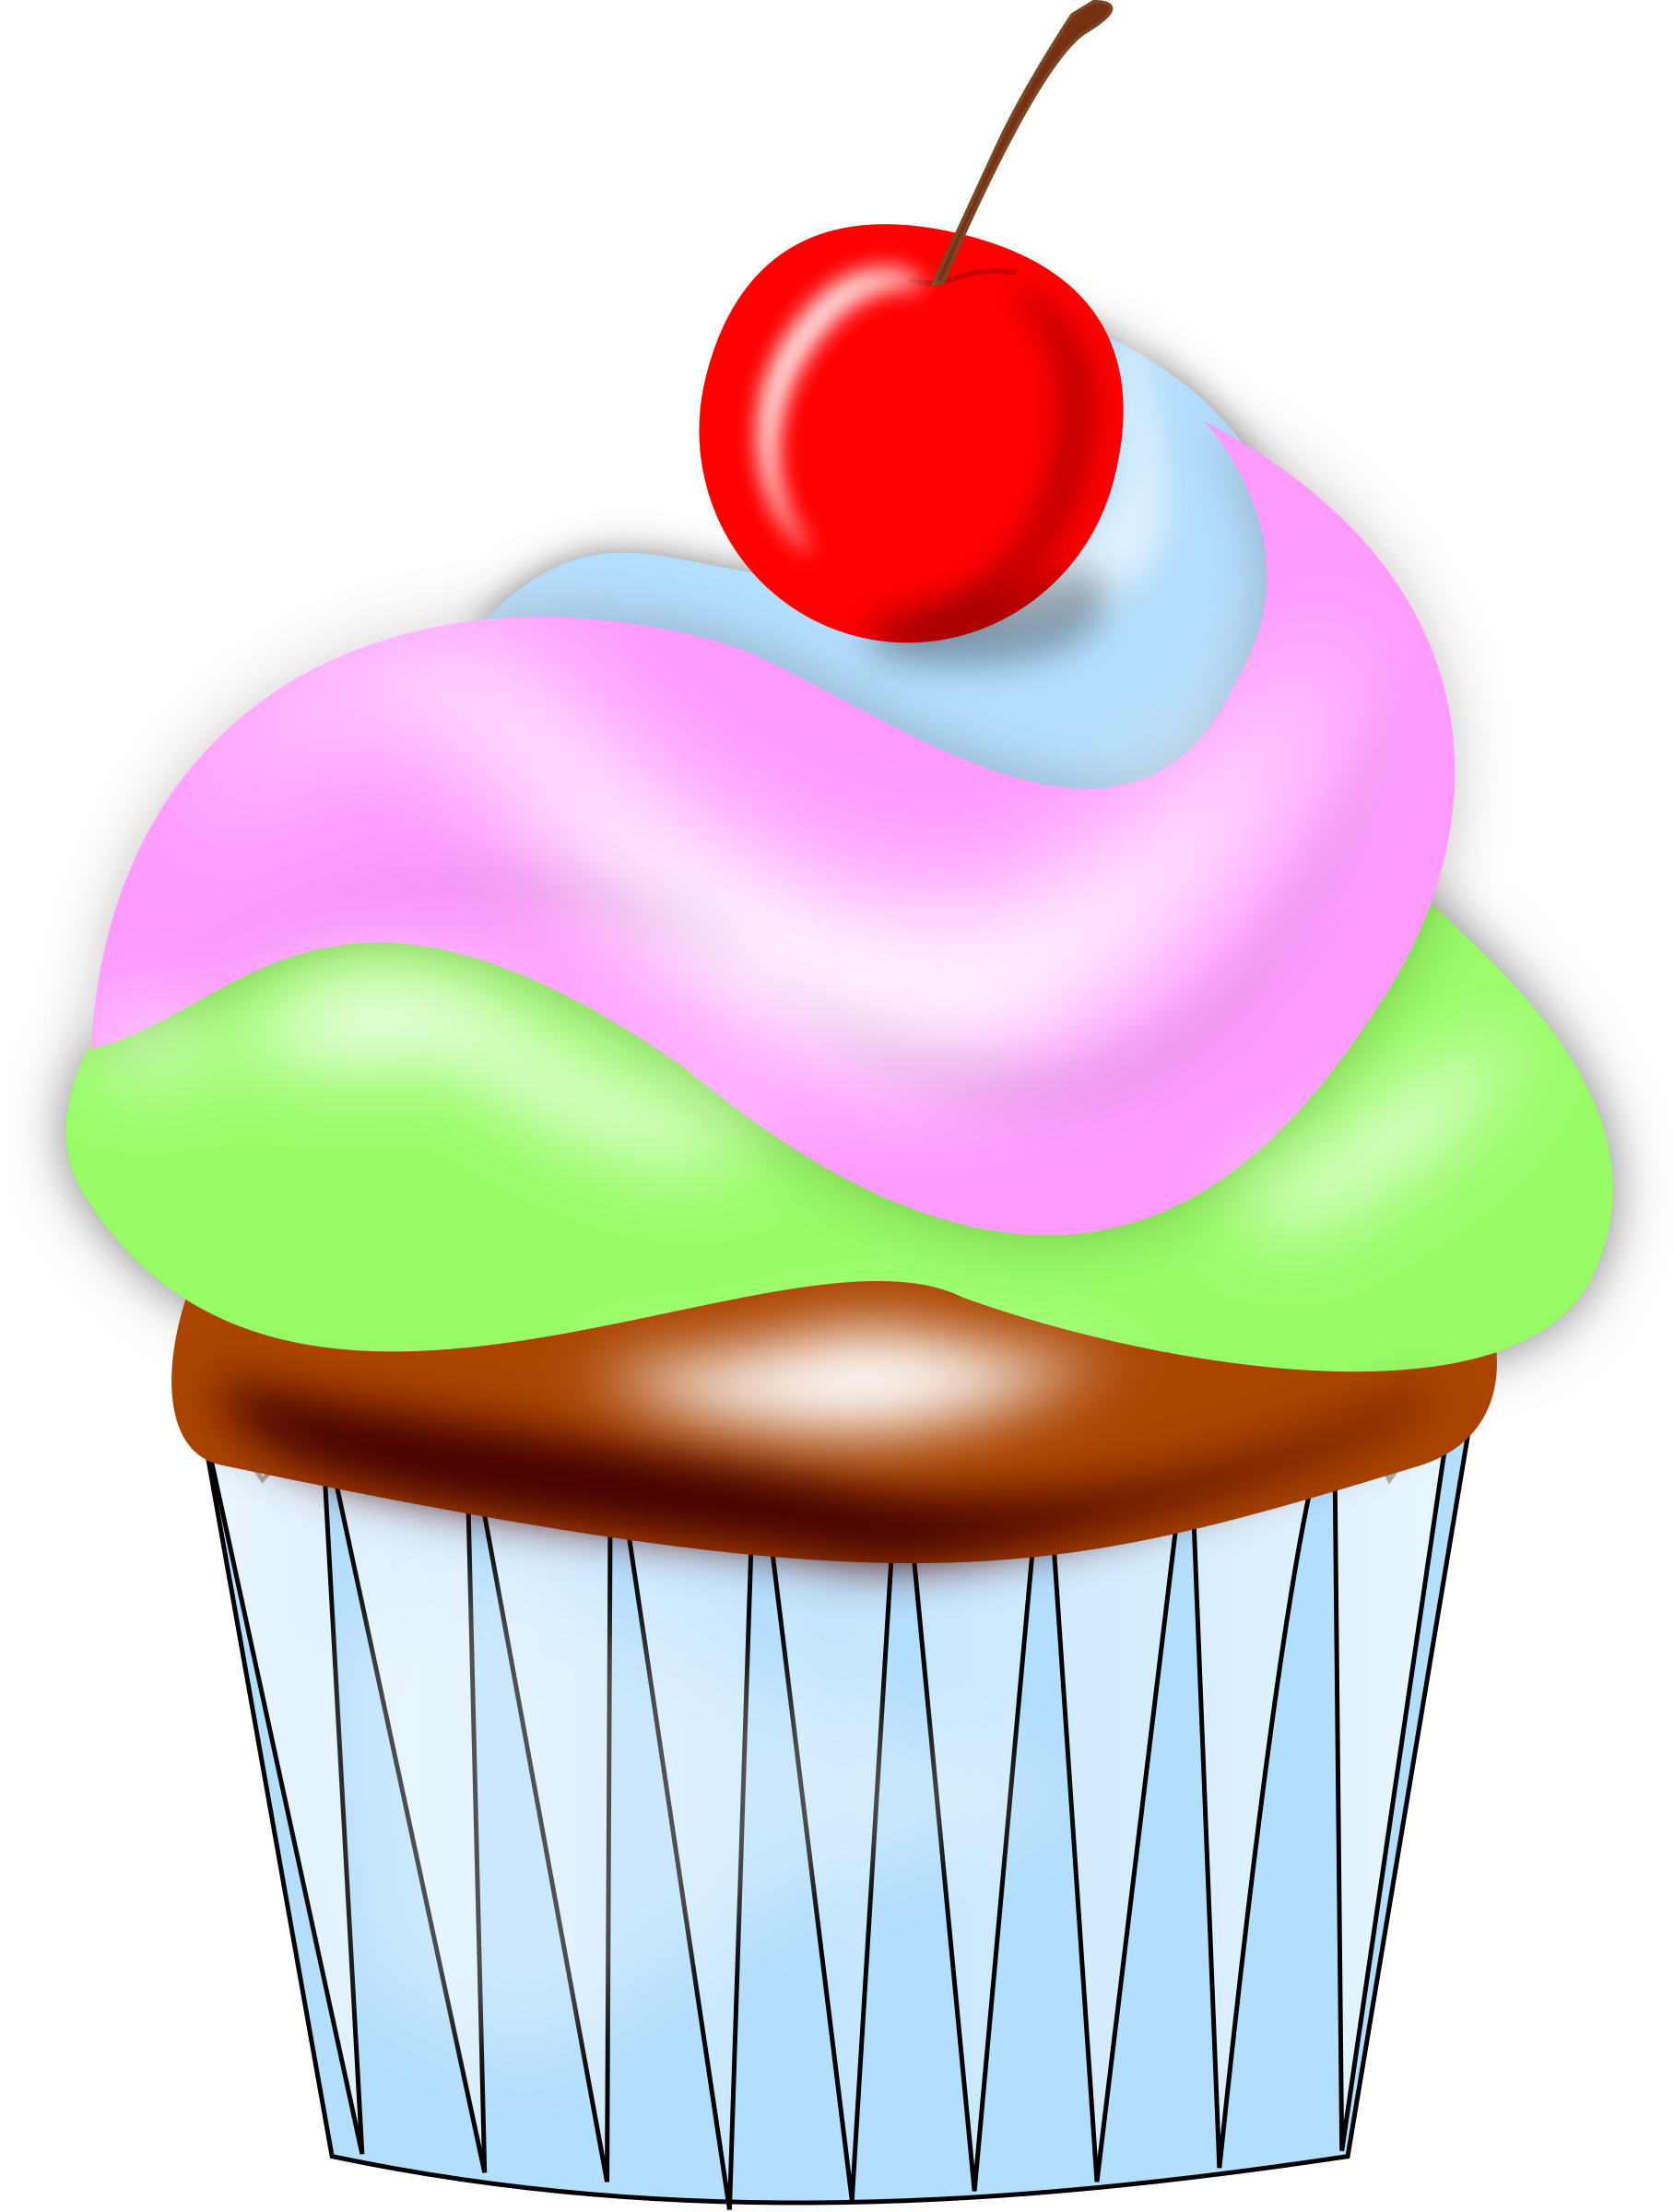 Cupcakes clipart cupcake logo. W cherry big image